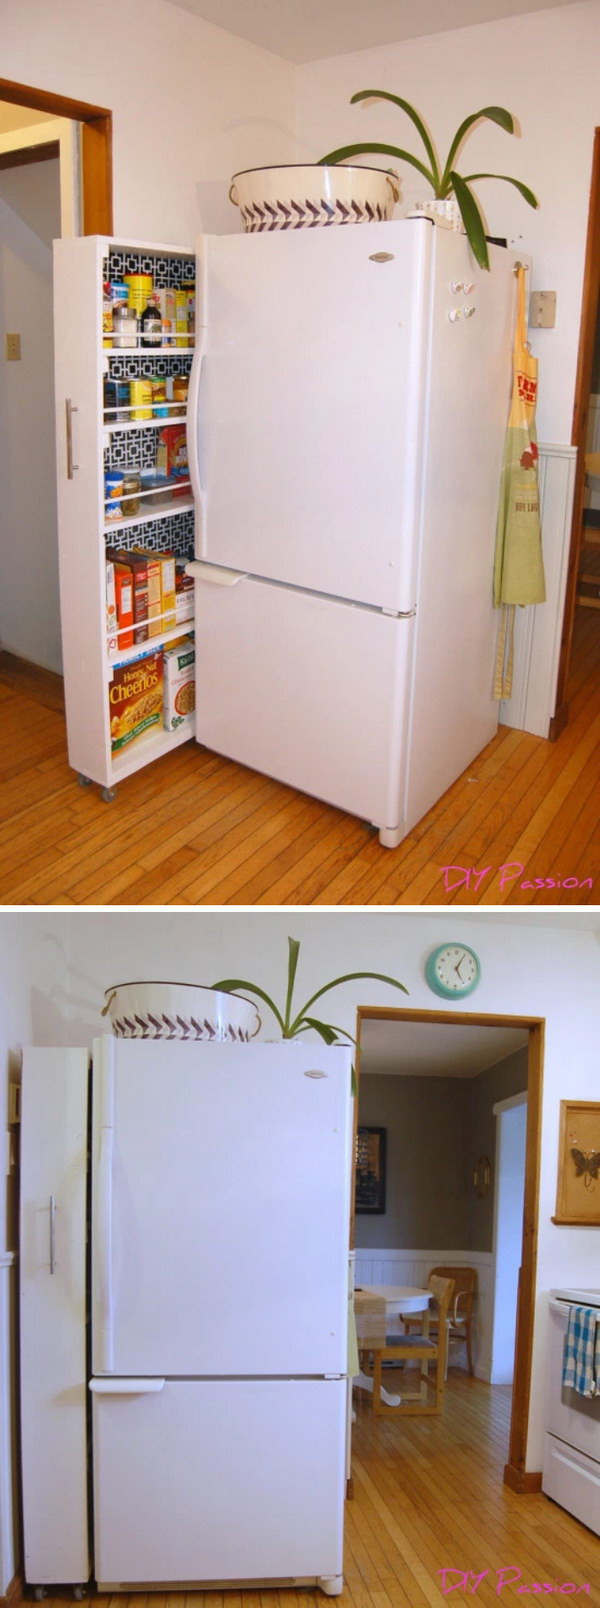 DIY Organization Ideas For Small Spaces
 50 Easy Storage Ideas for Small Spaces